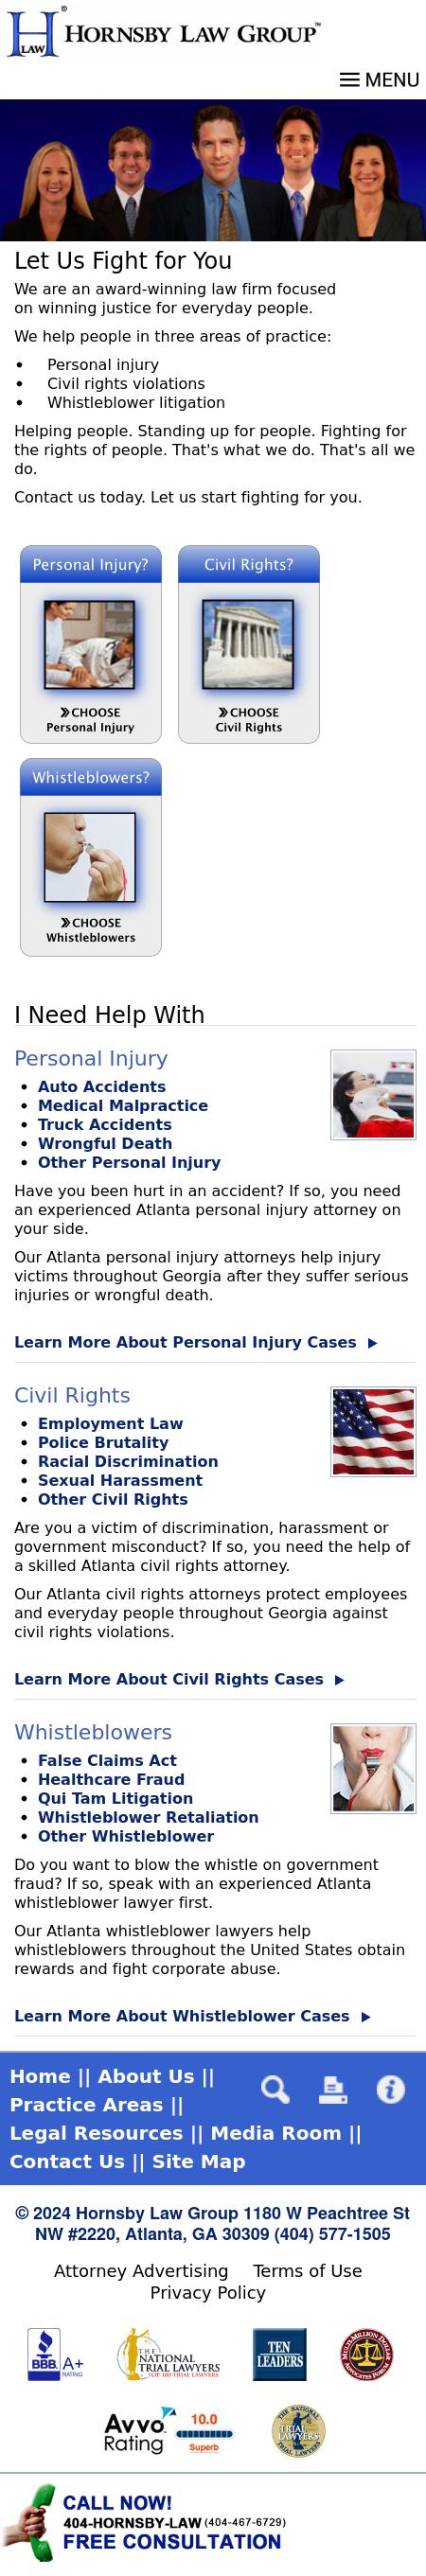 Hornsby Law Group - Atlanta GA Lawyers